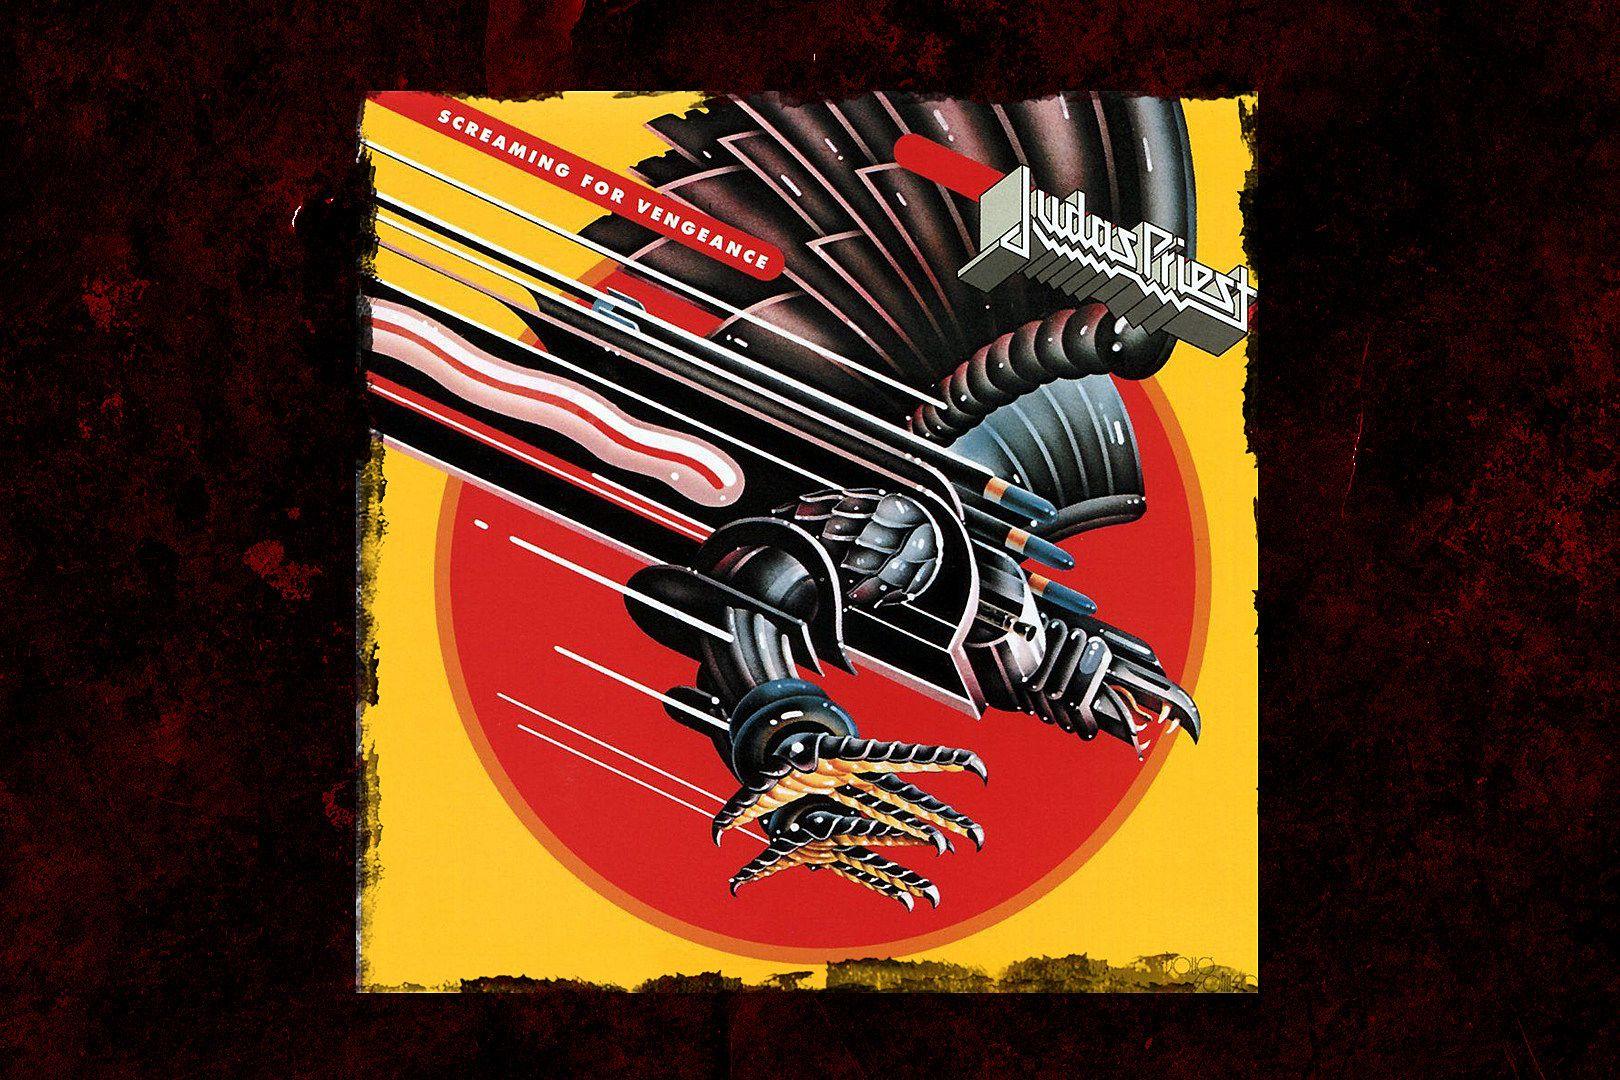 Judas Priest Original Logo - 36 Years Ago: Judas Priest Release 'Screaming for Vengeance'